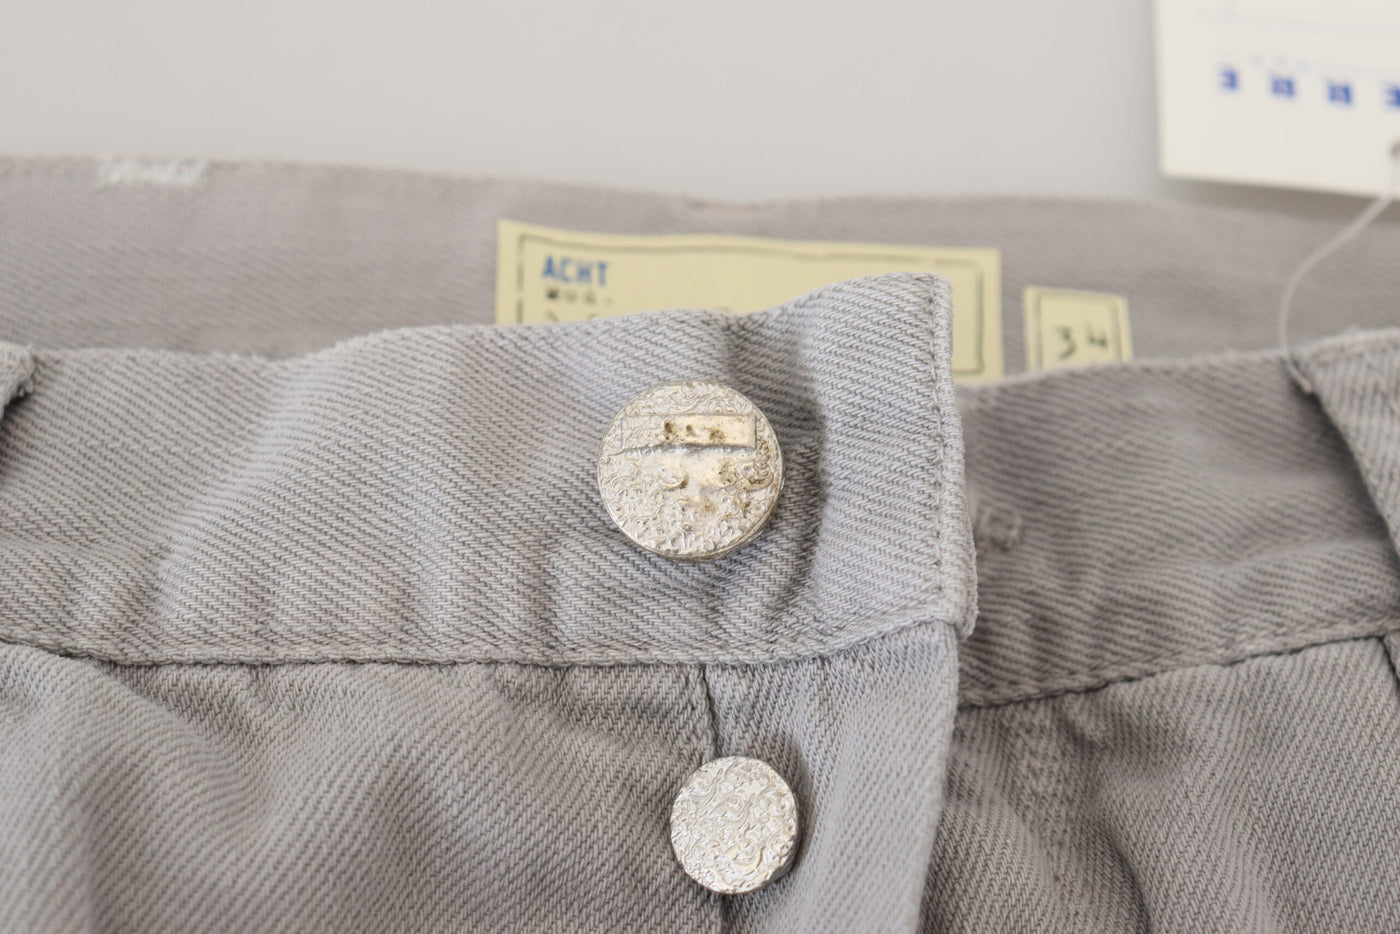 Acht Gray Cotton Straight Fit Folded Hem Casual Denim Jeans